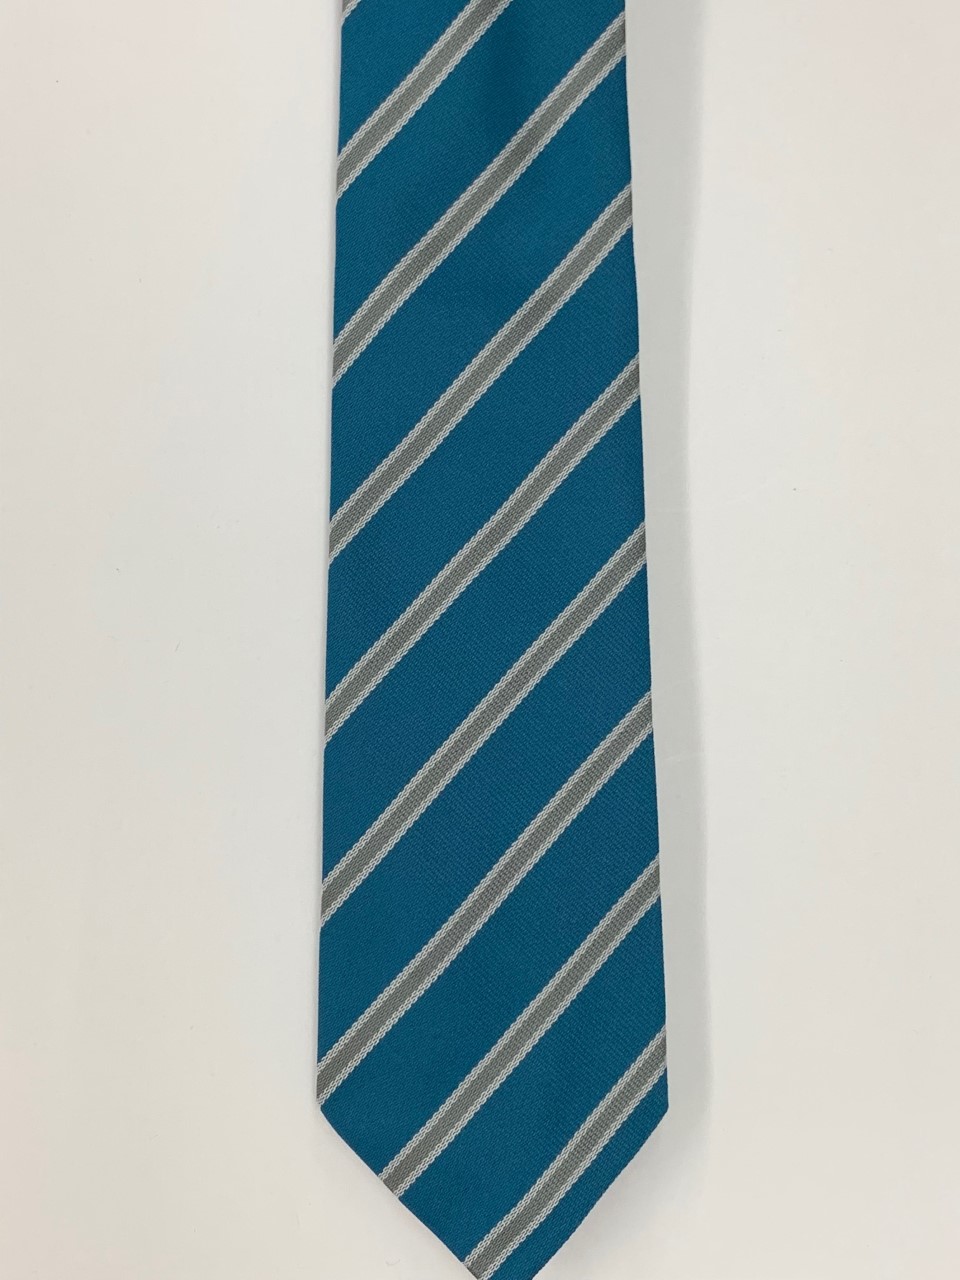 Colaiste Dun Iascaigh Petrol Tie - Uniform World